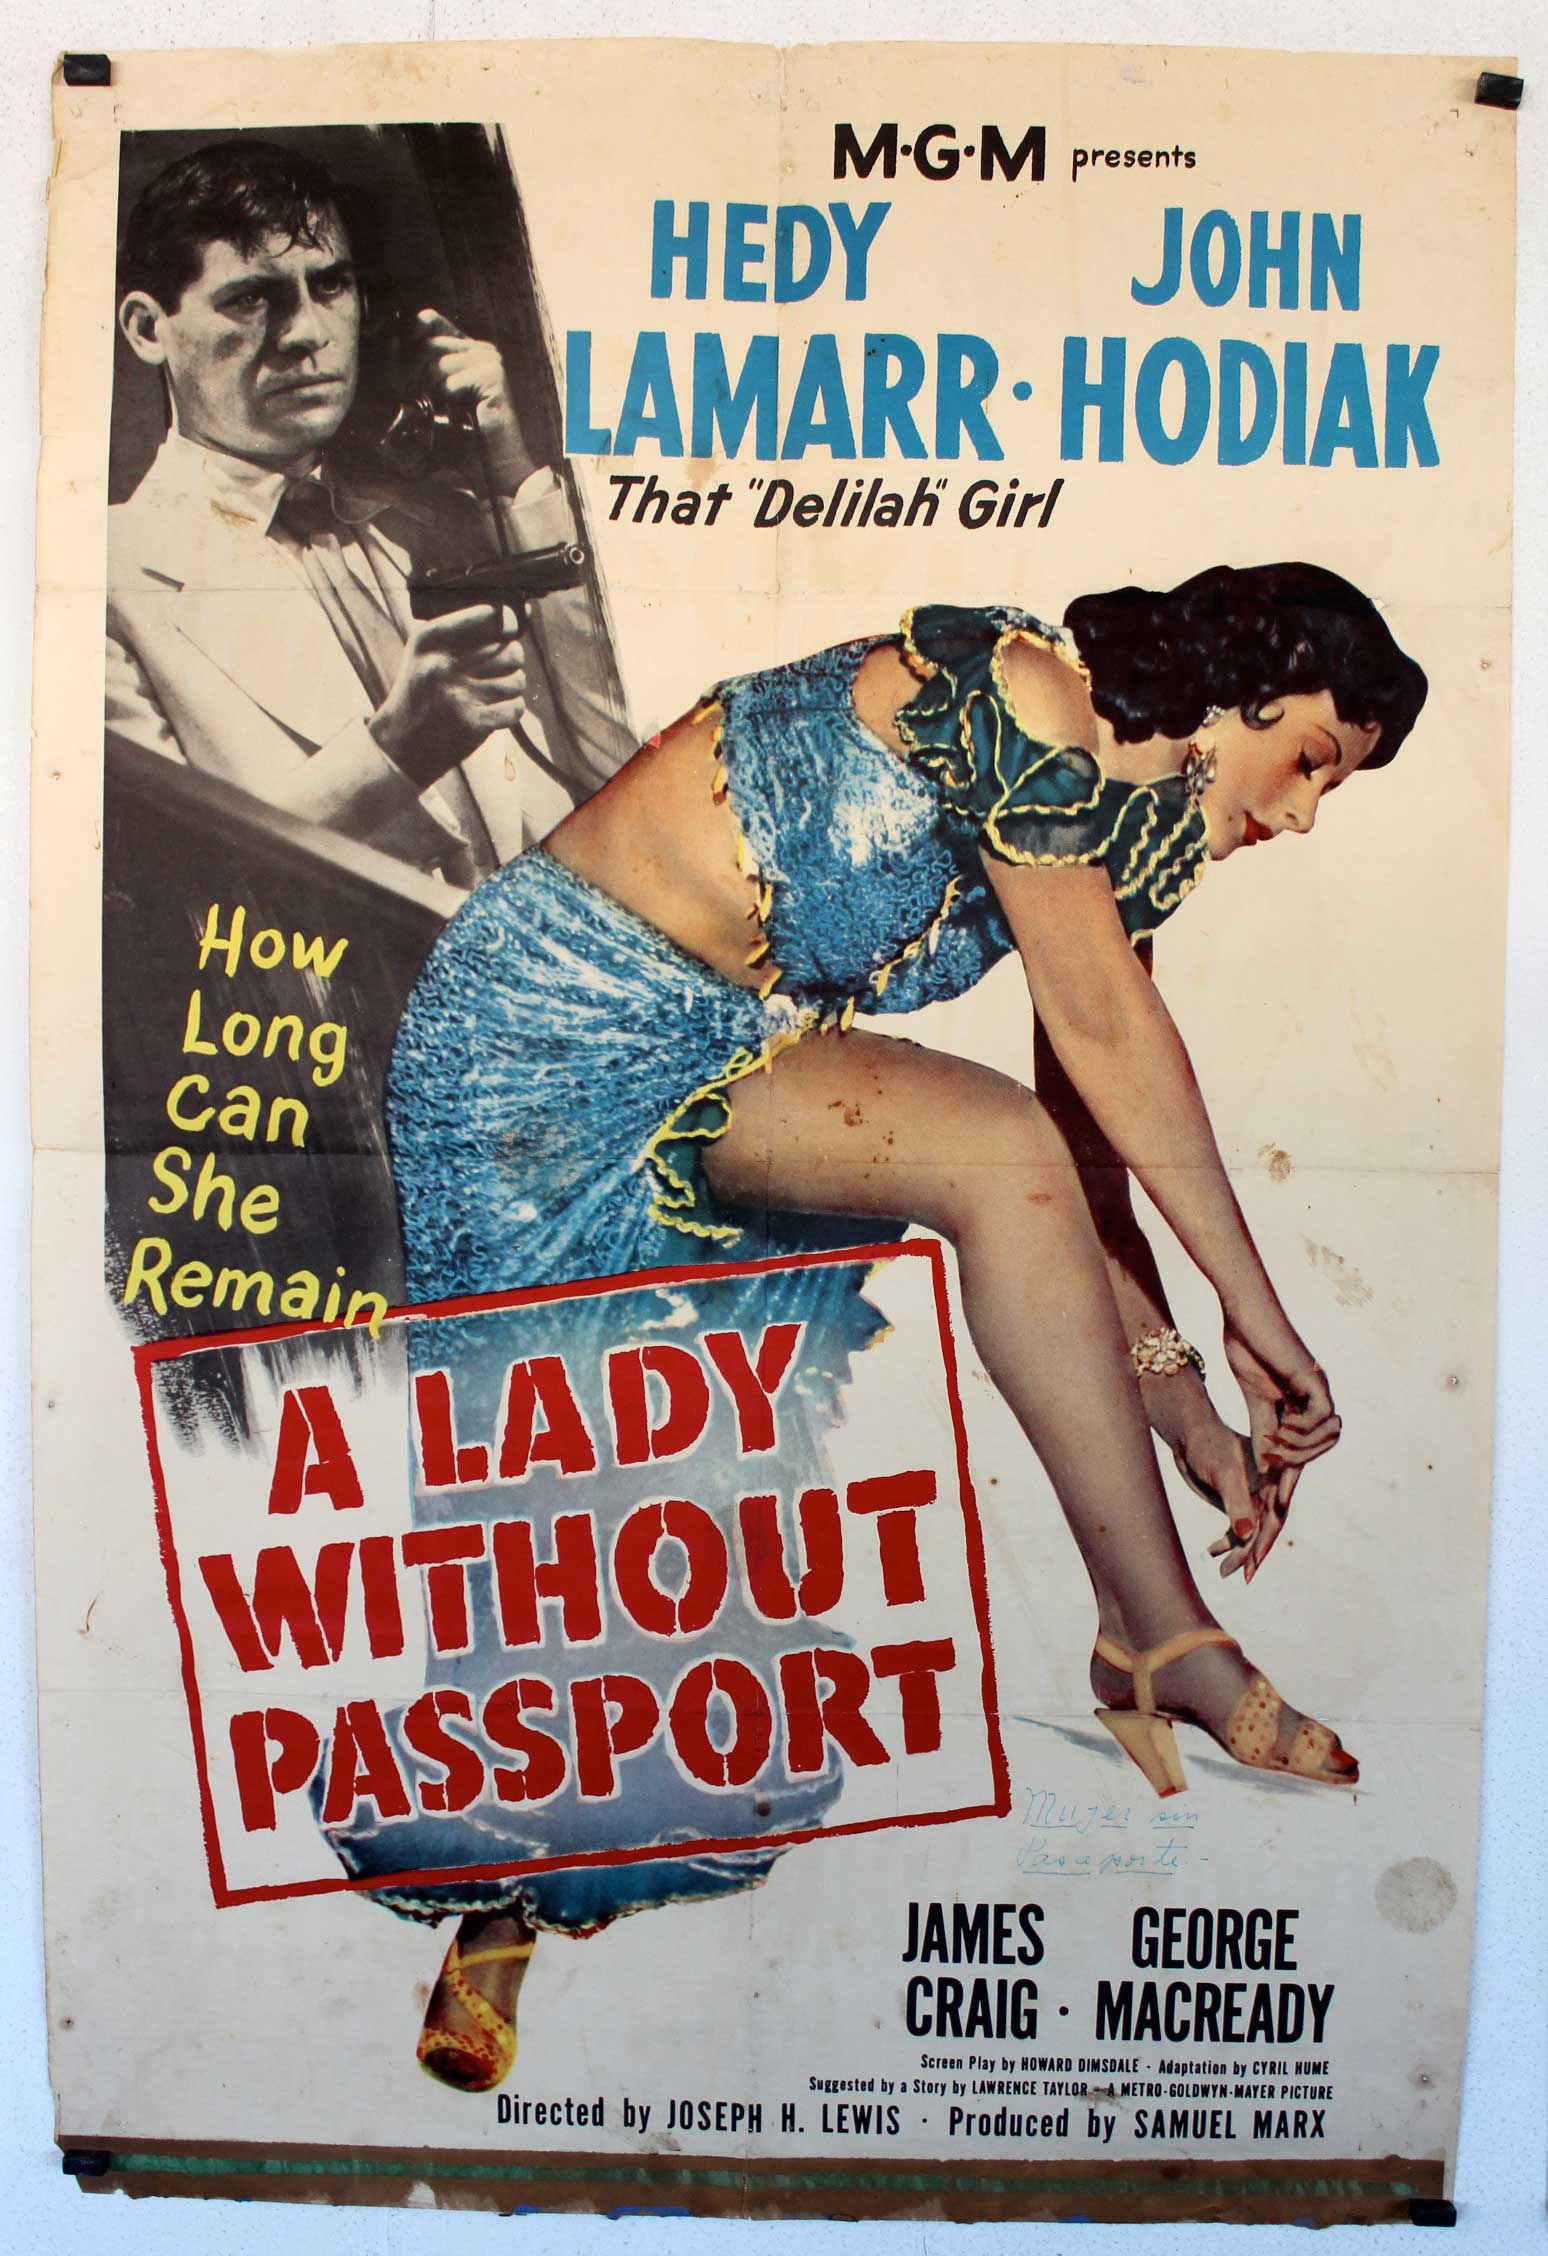 A LADY WITHOUT PASSPORT